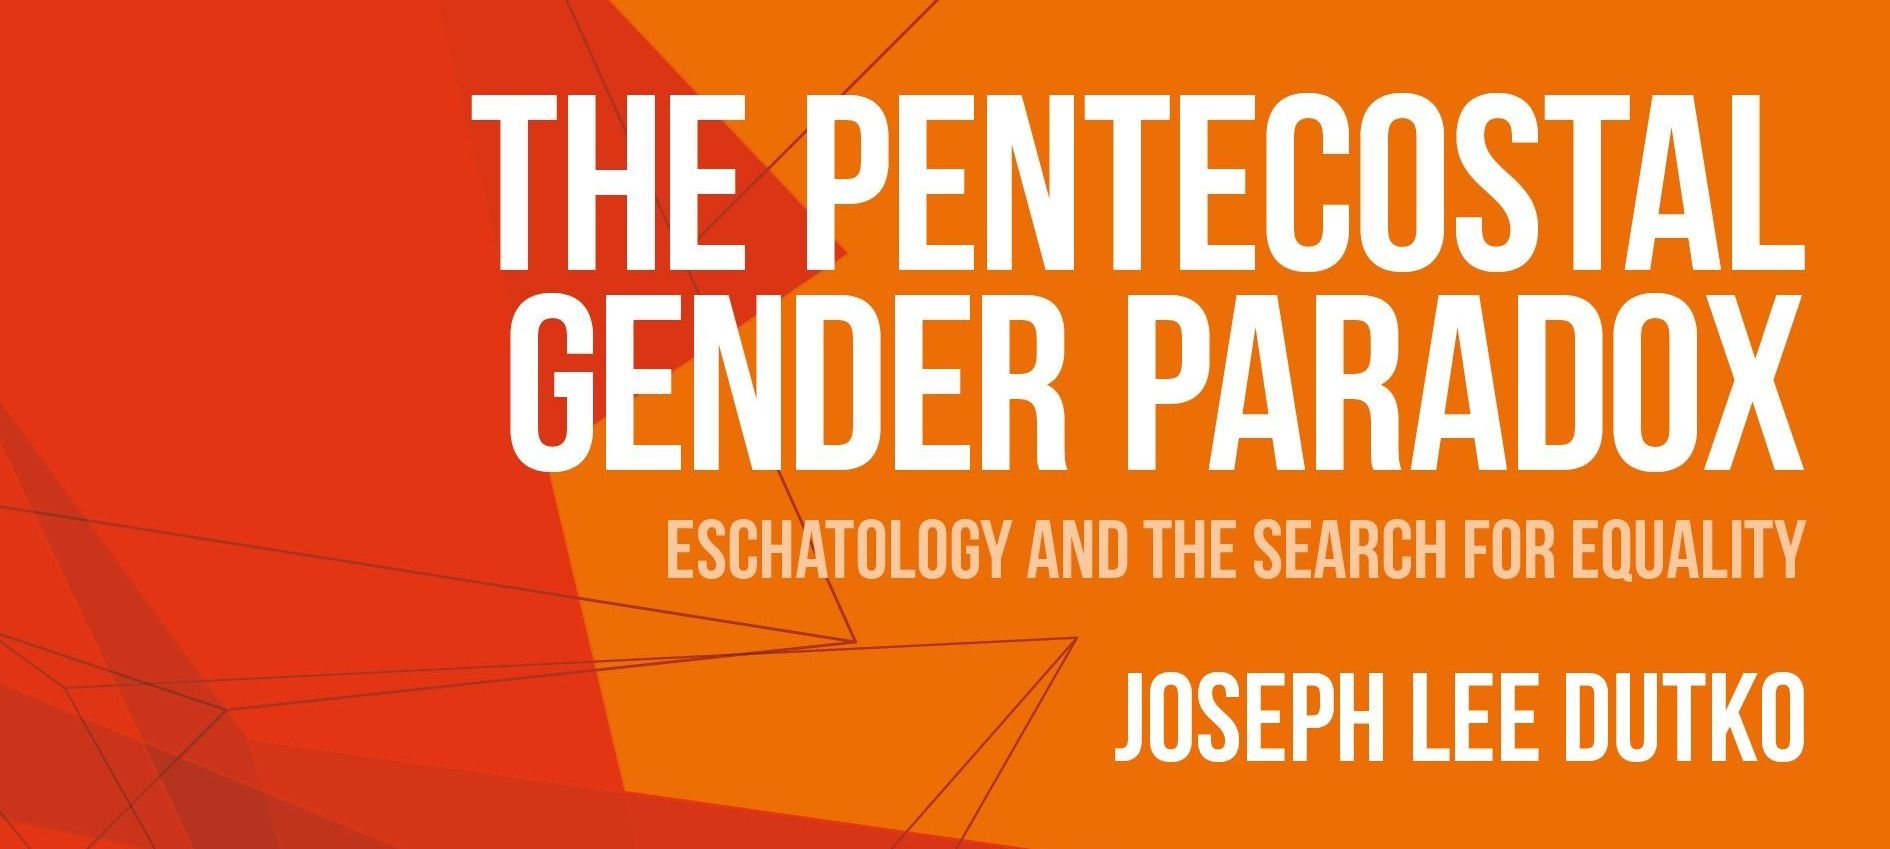 The Pentecostal Gender Paradox by Joseph Lee Dutko